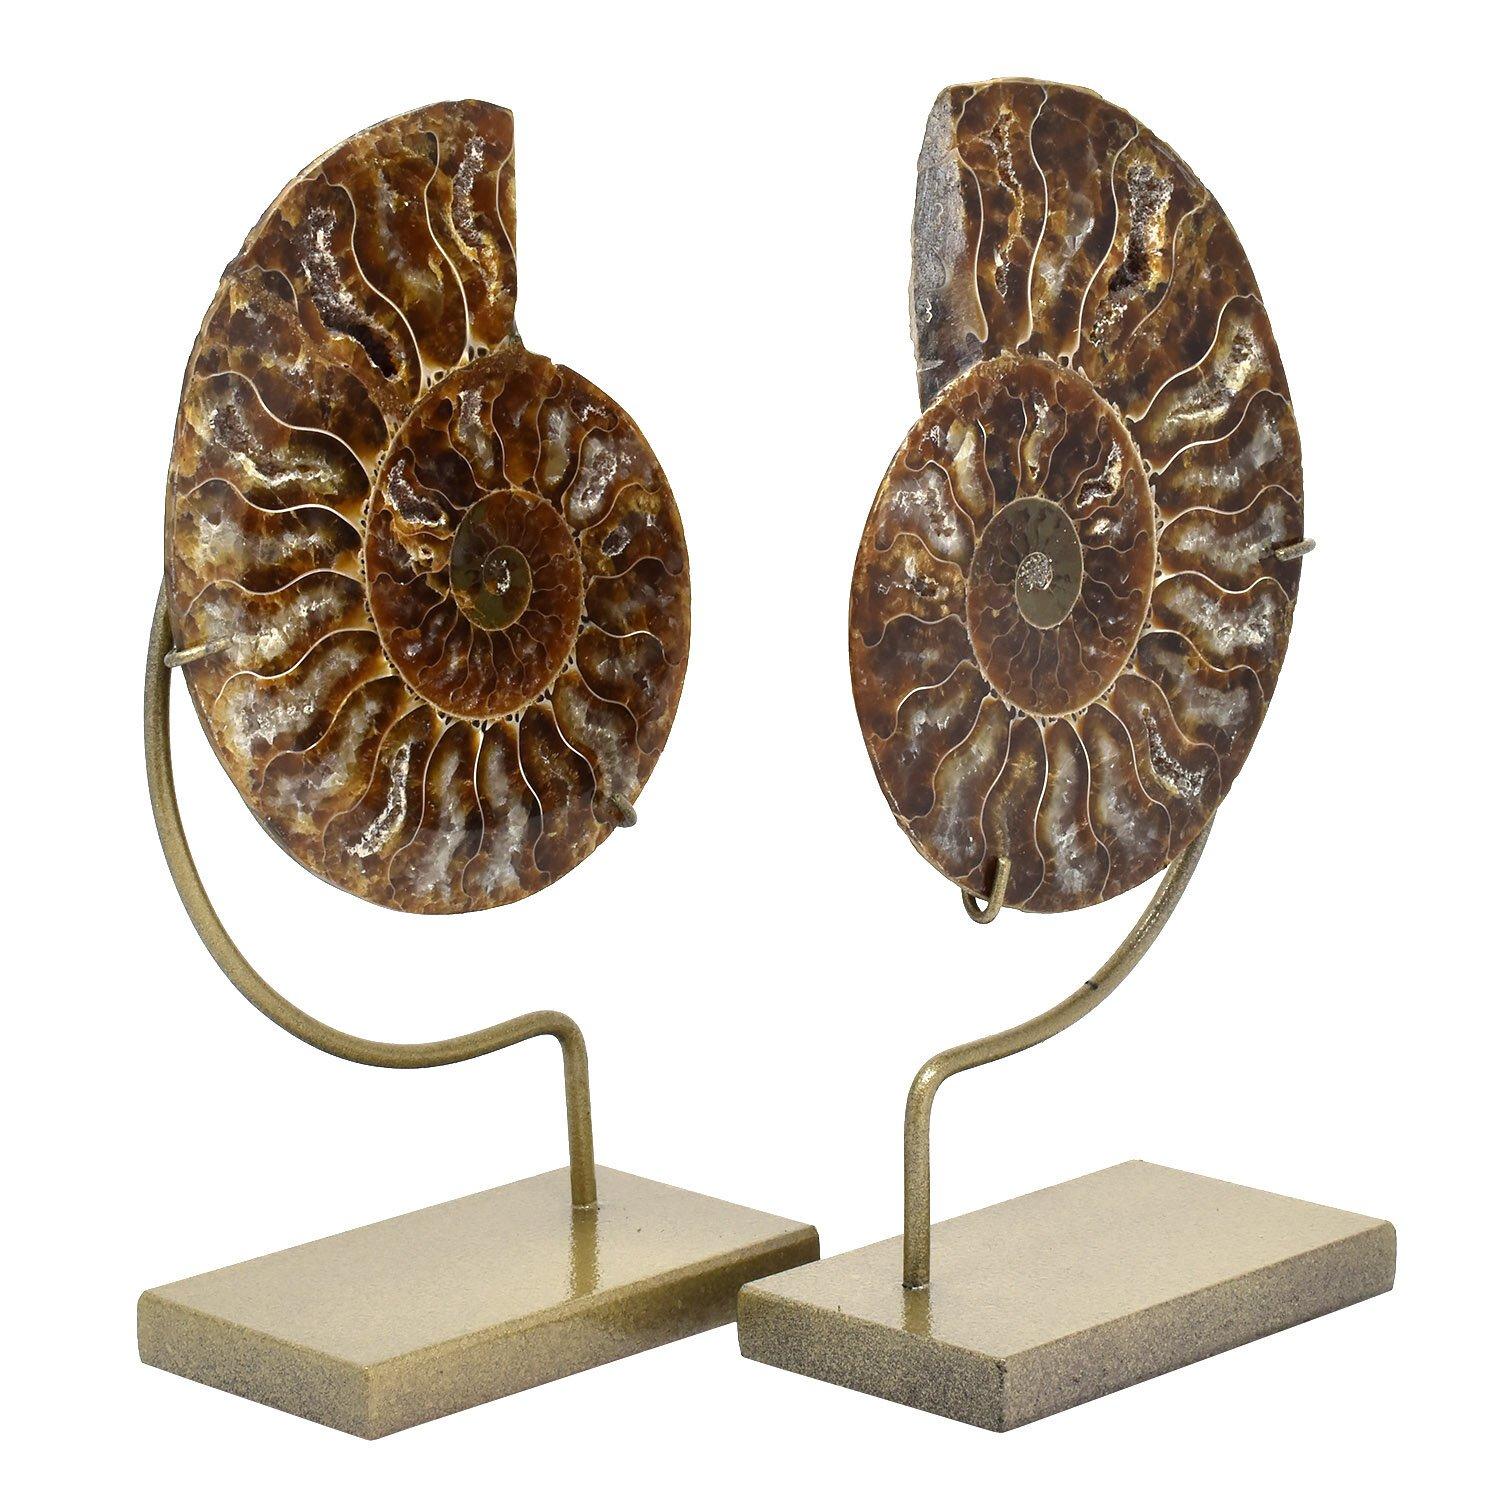 Other Matched Pair Split Ammonite Fossil Set Mineral Specimen For Sale